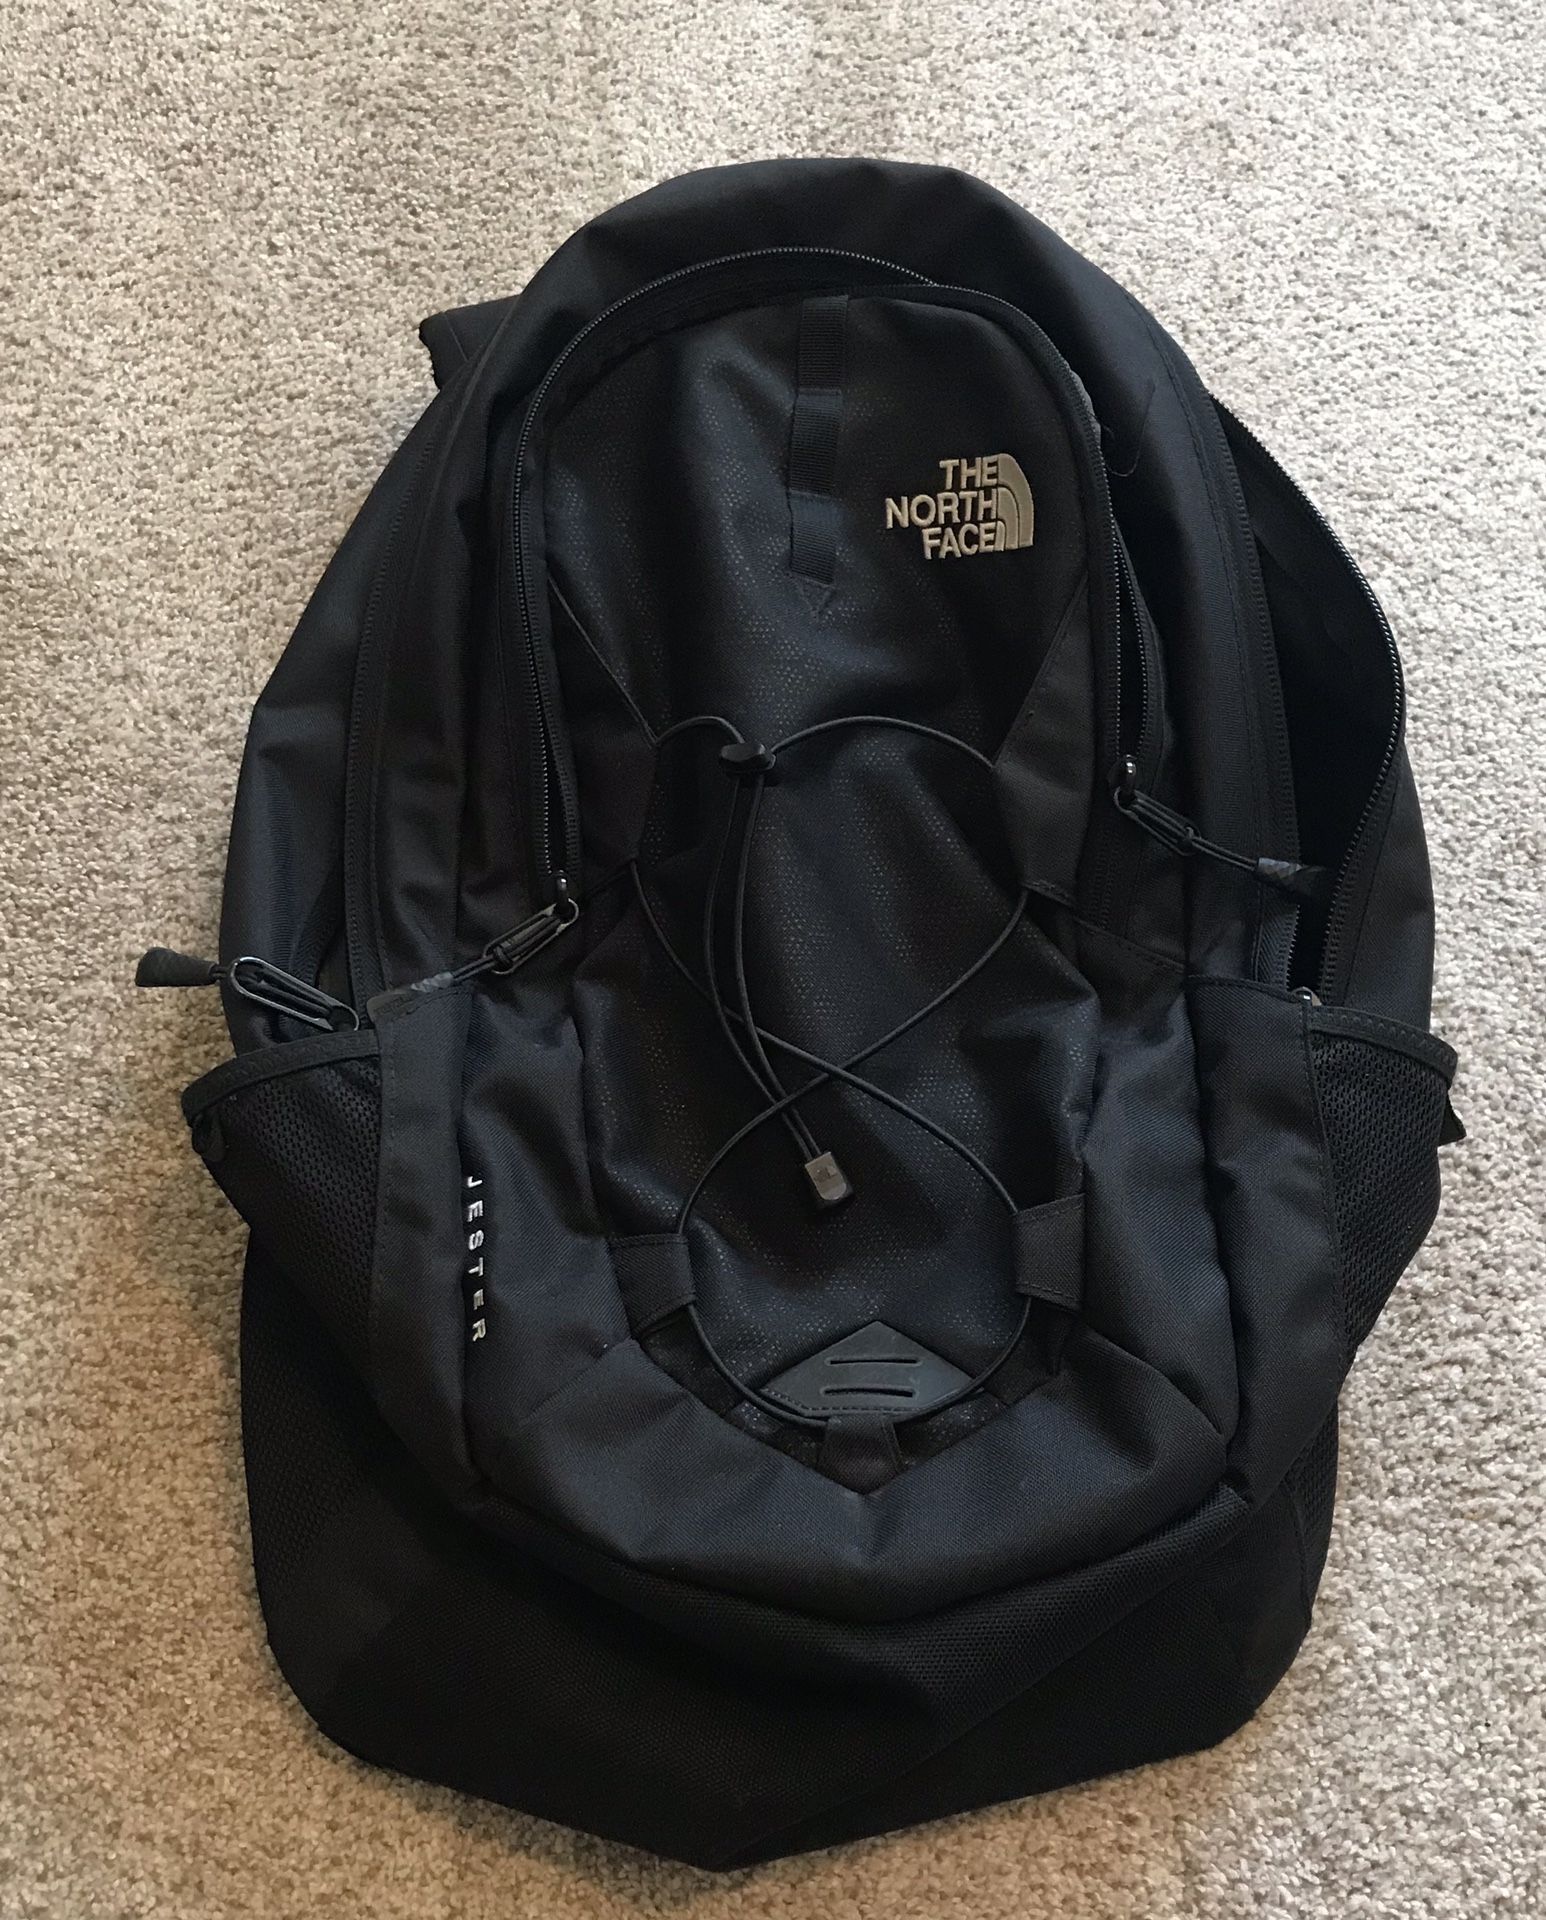 The North Face Jester Black Backpack/Book Bag